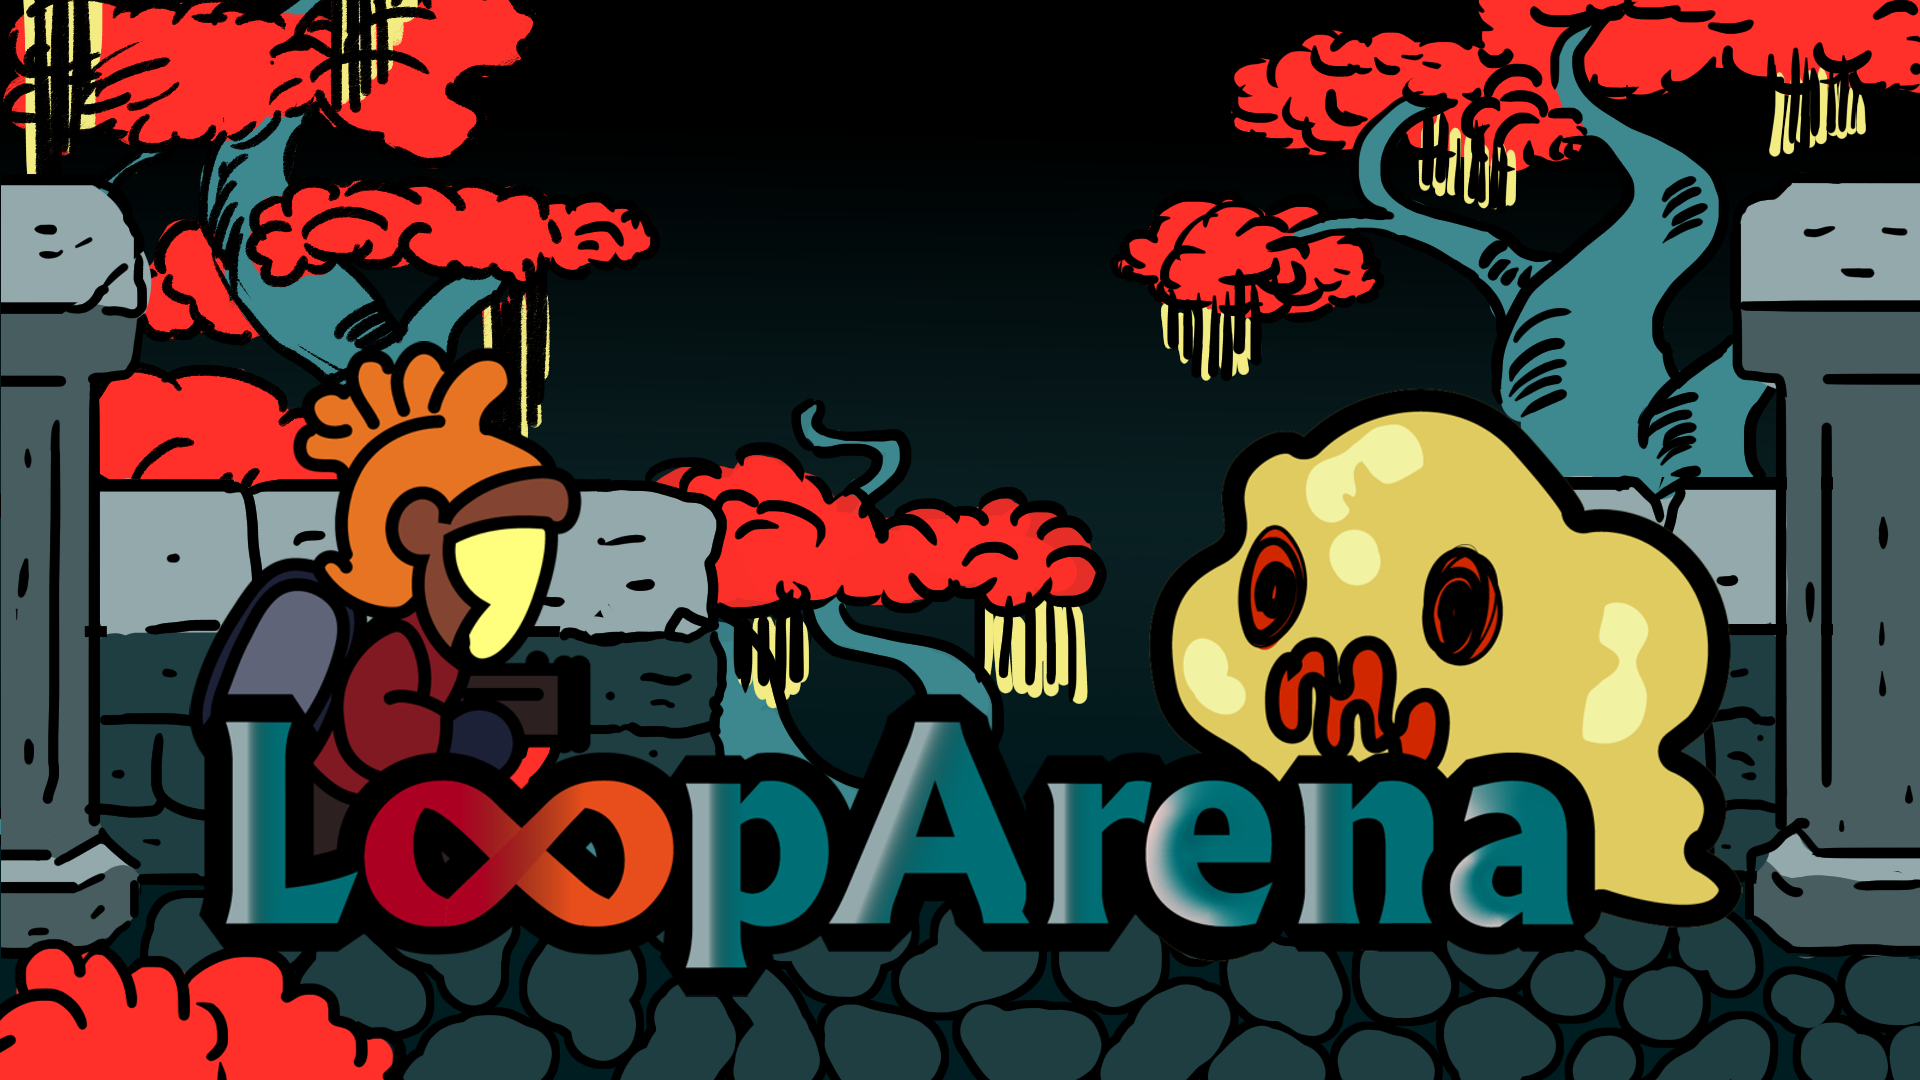 Loop Arena